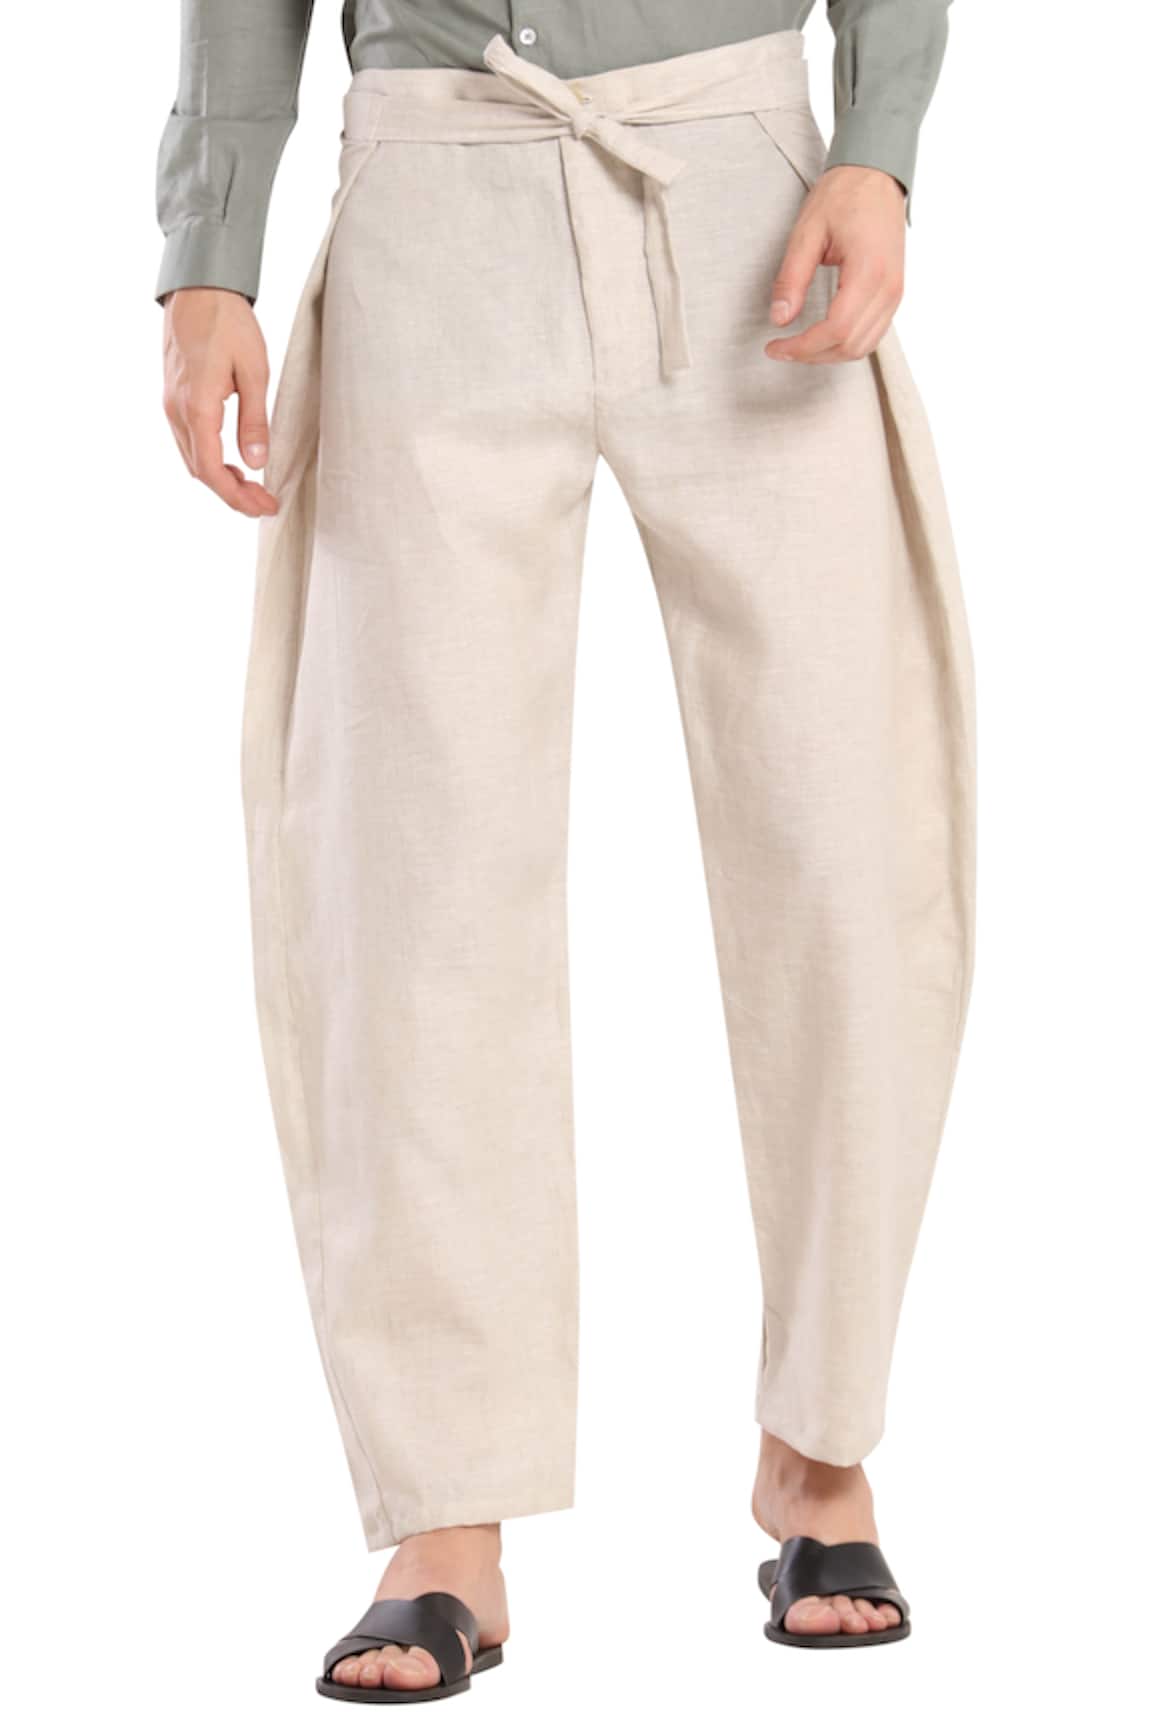 Buy Mens Cotton Linen English Khaki Trousers Online  Merchant Marine